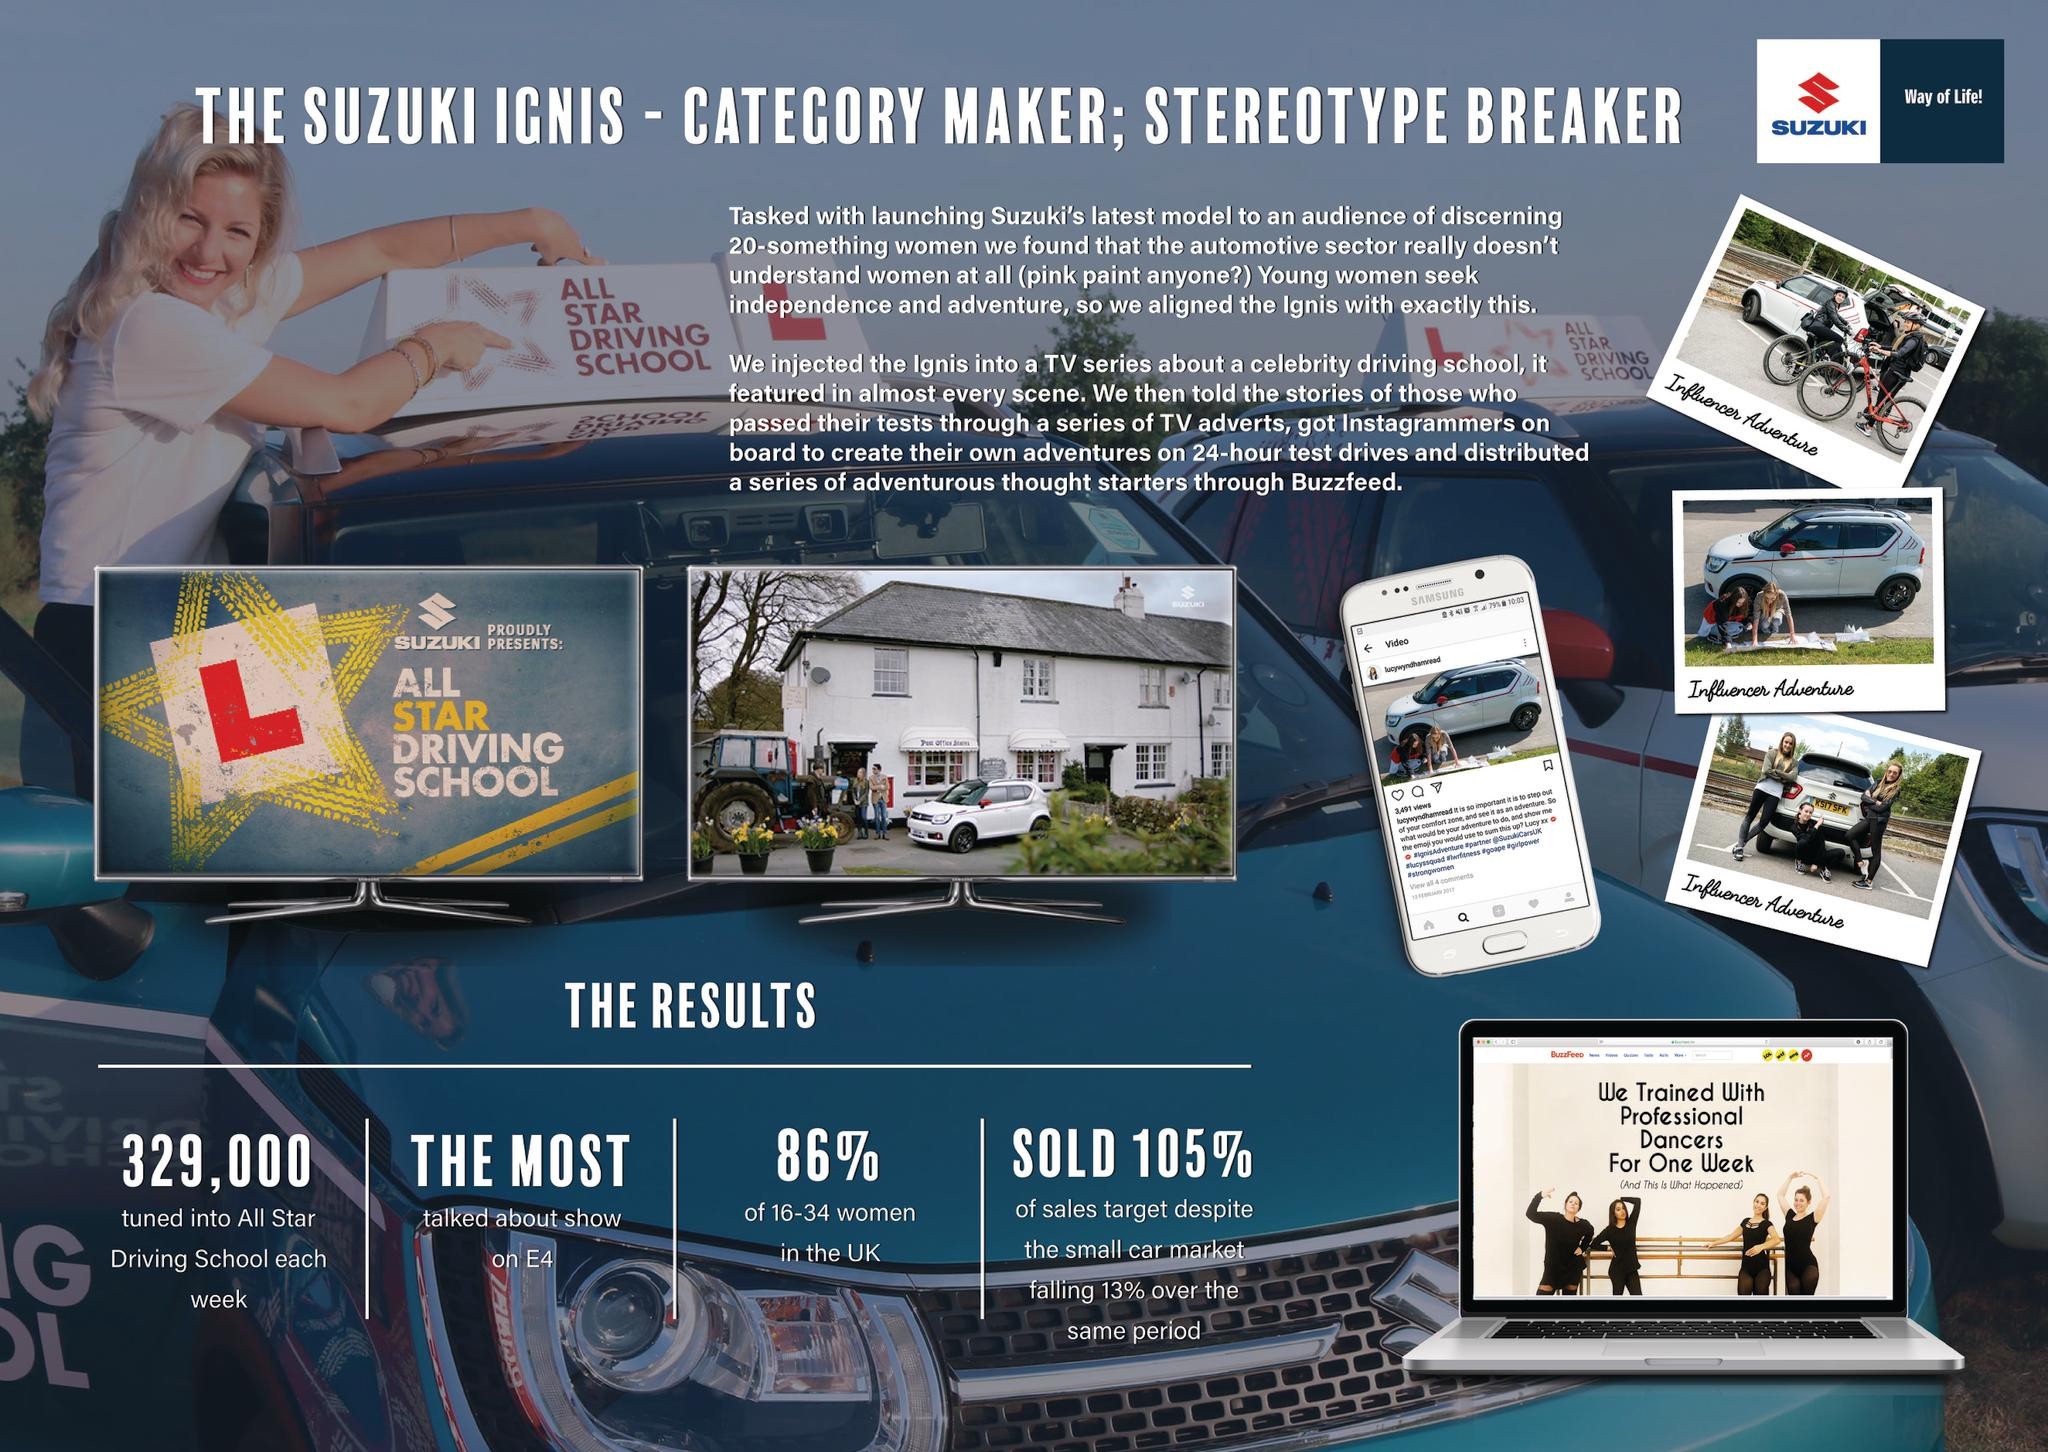 The Suzuki Ignis - Category maker; stereotype breaker